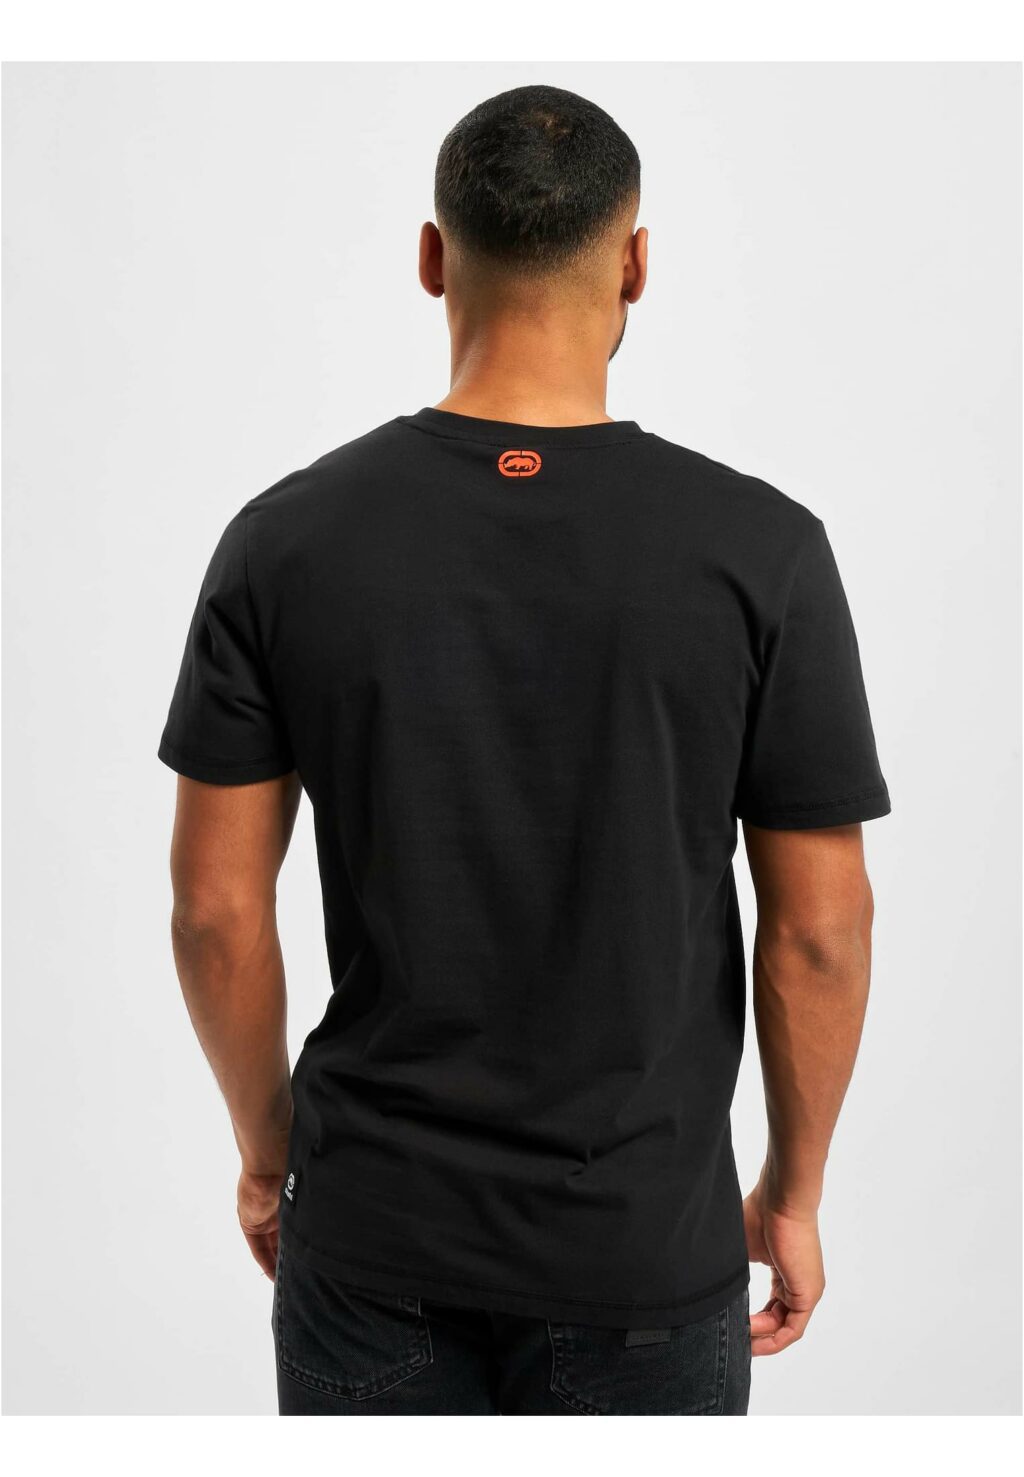 Ecko Unltd. Boort T-Shirt black ECKOTS1110